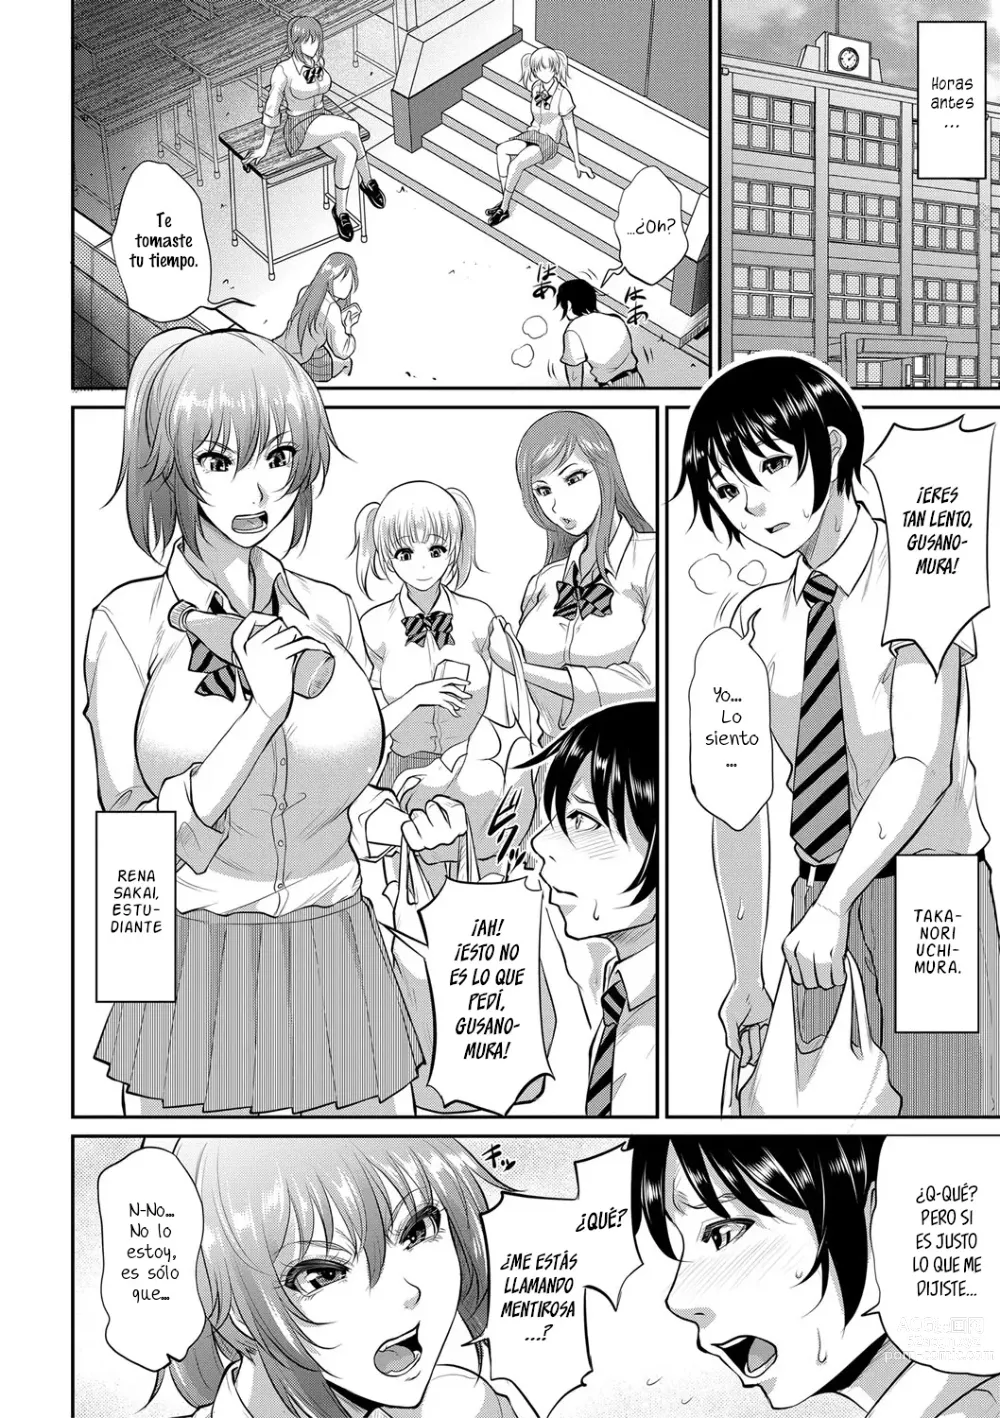 Page 2 of manga Ijimecco